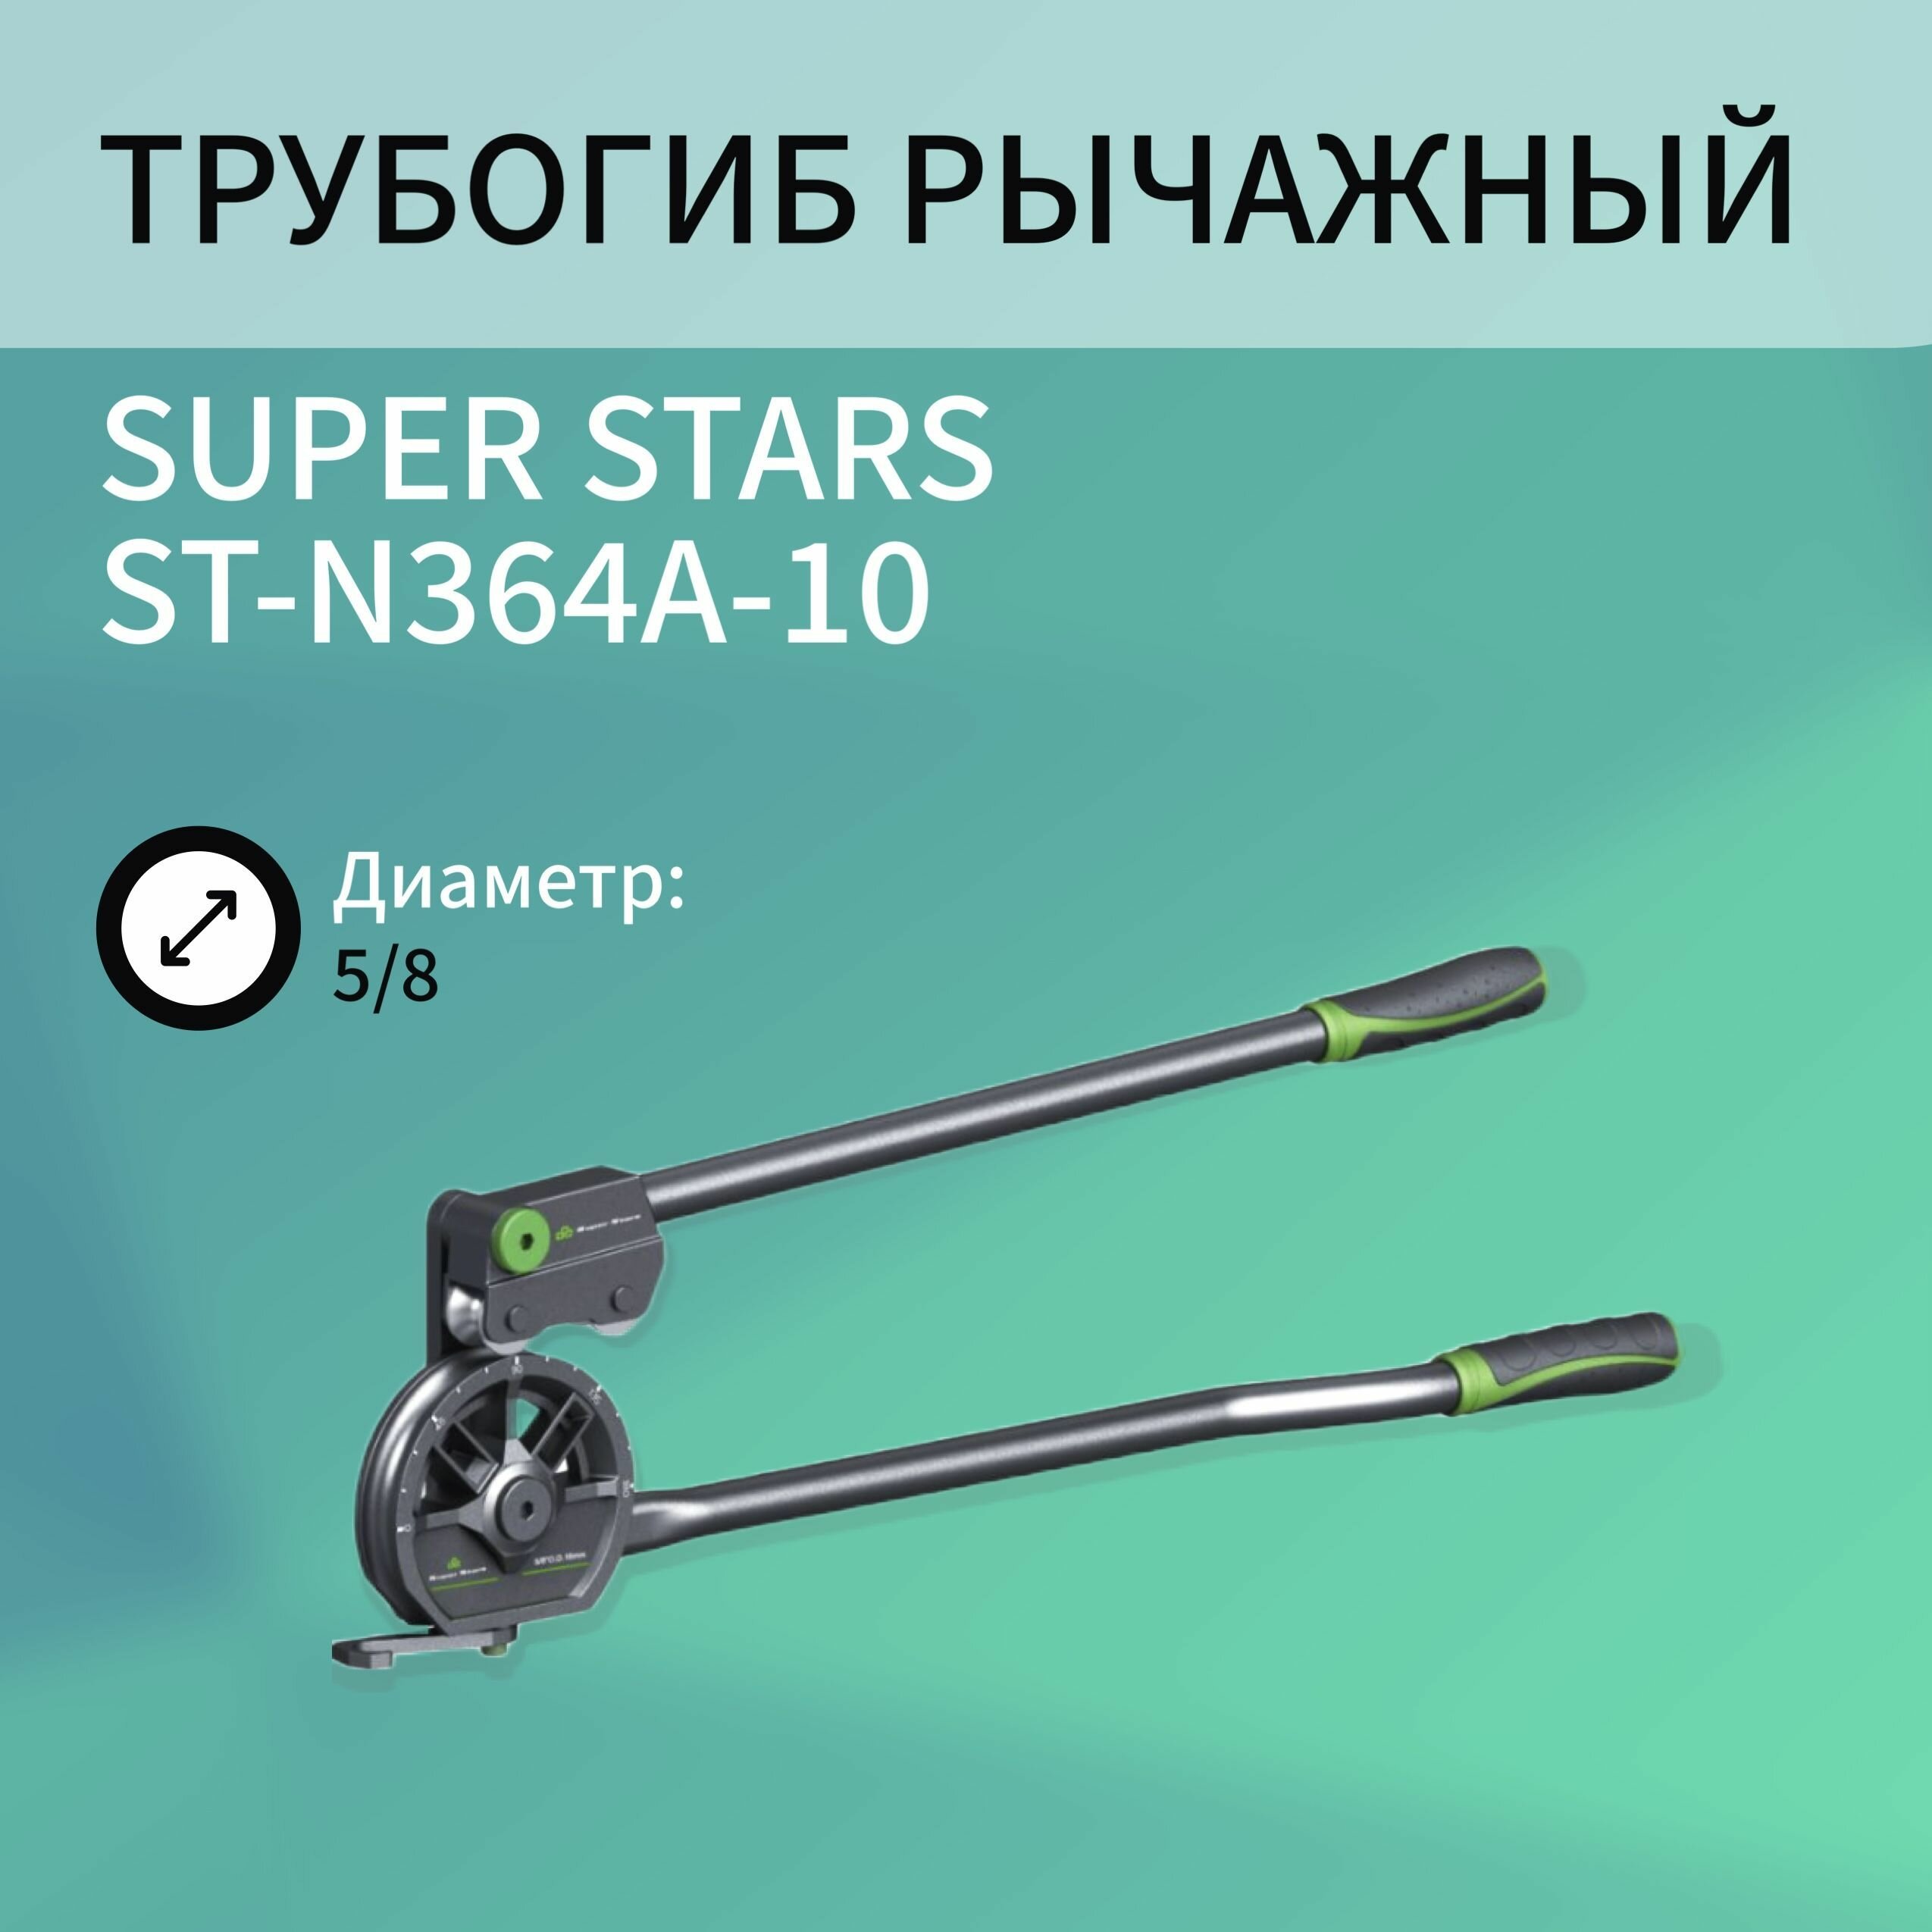 Трубогиб рычажный SUPER STARS ST-N364A-10 диаметр 5/8"